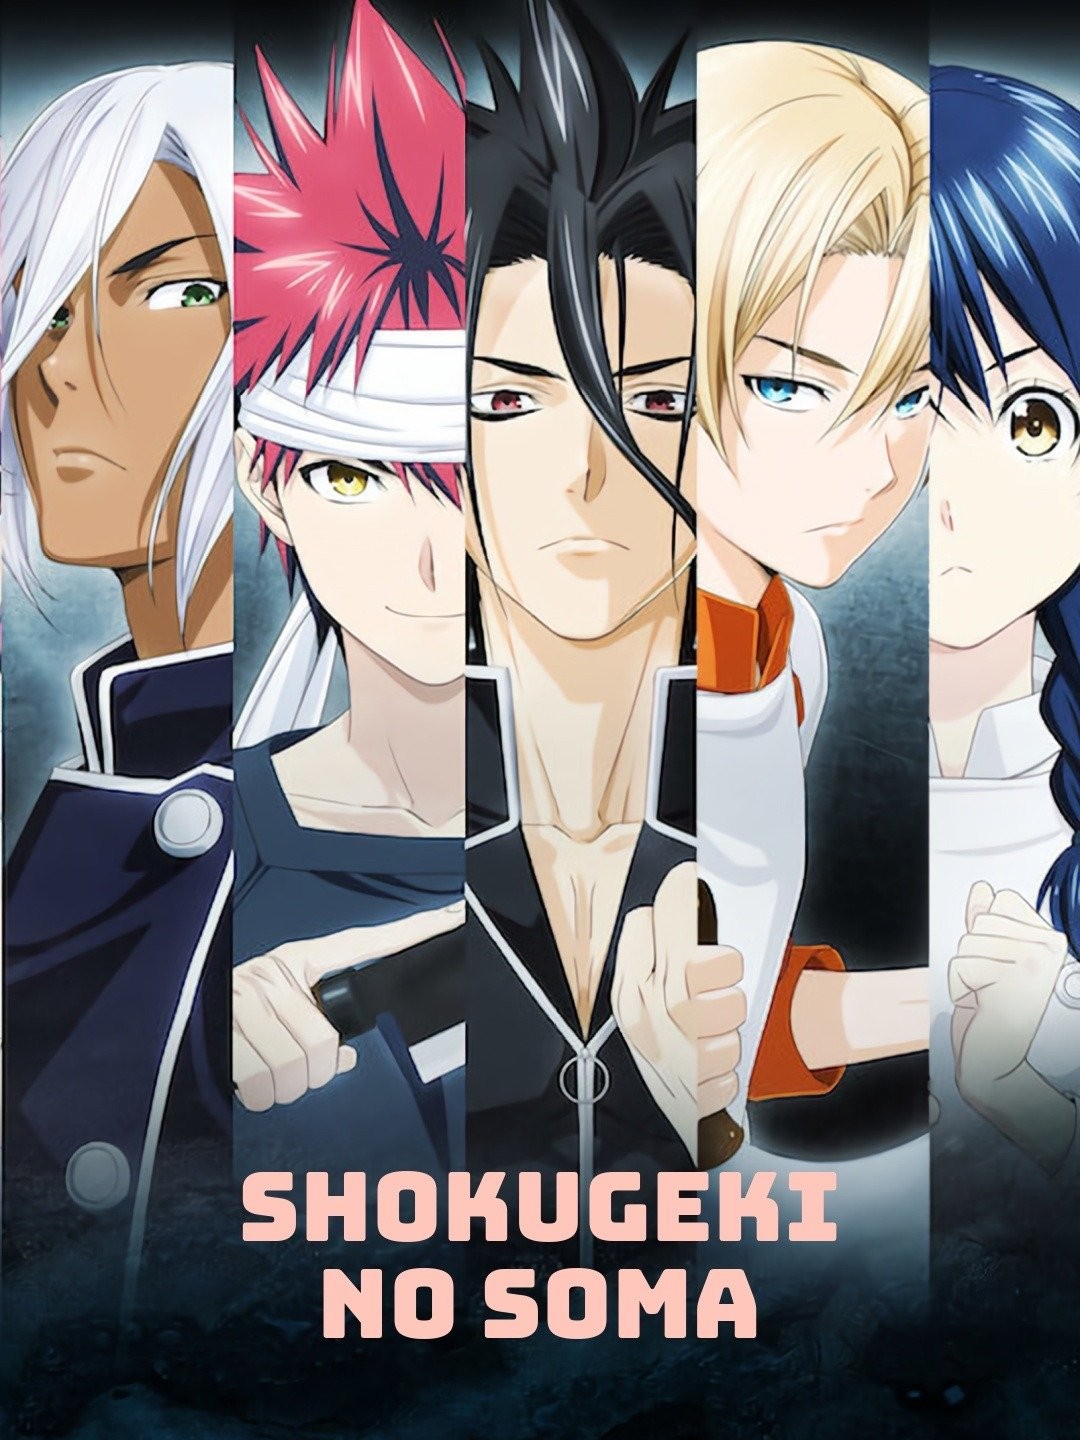 Food Wars: Shokugeki no Souma (Season 1) Review